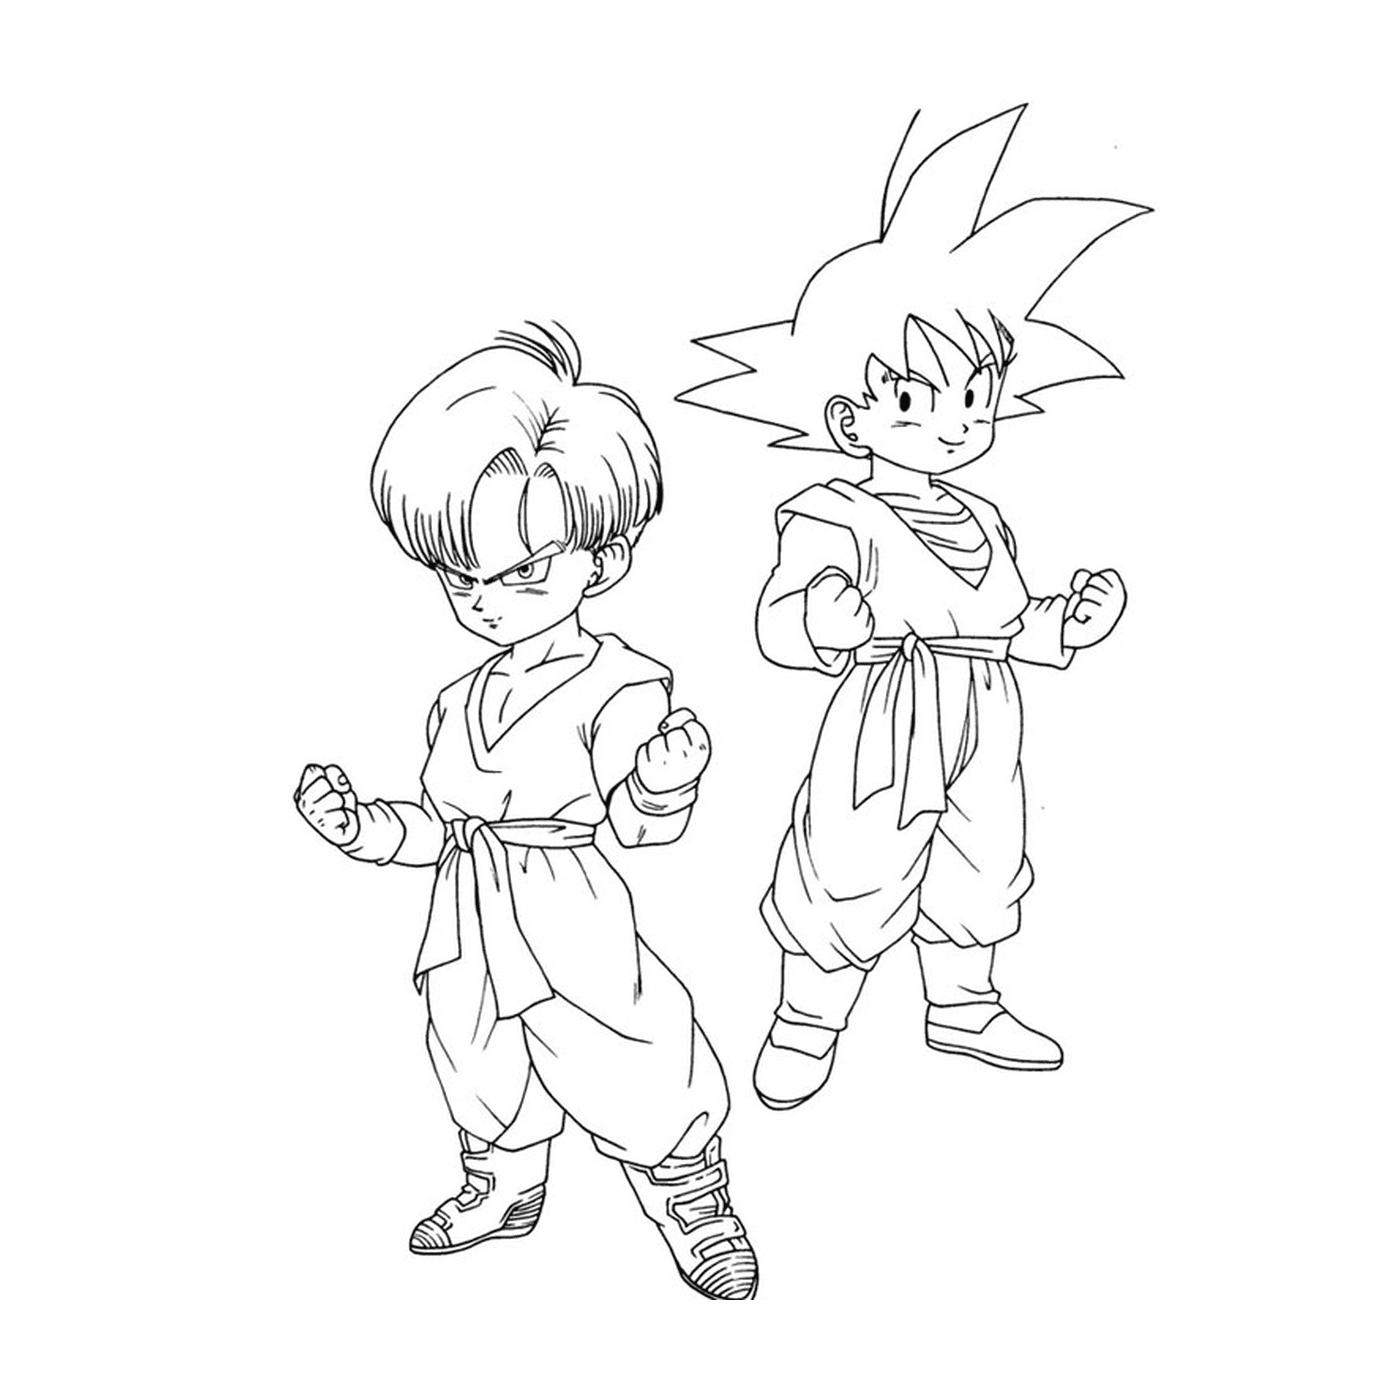   Goku et Gohan enfant de Dragon Ball Z 